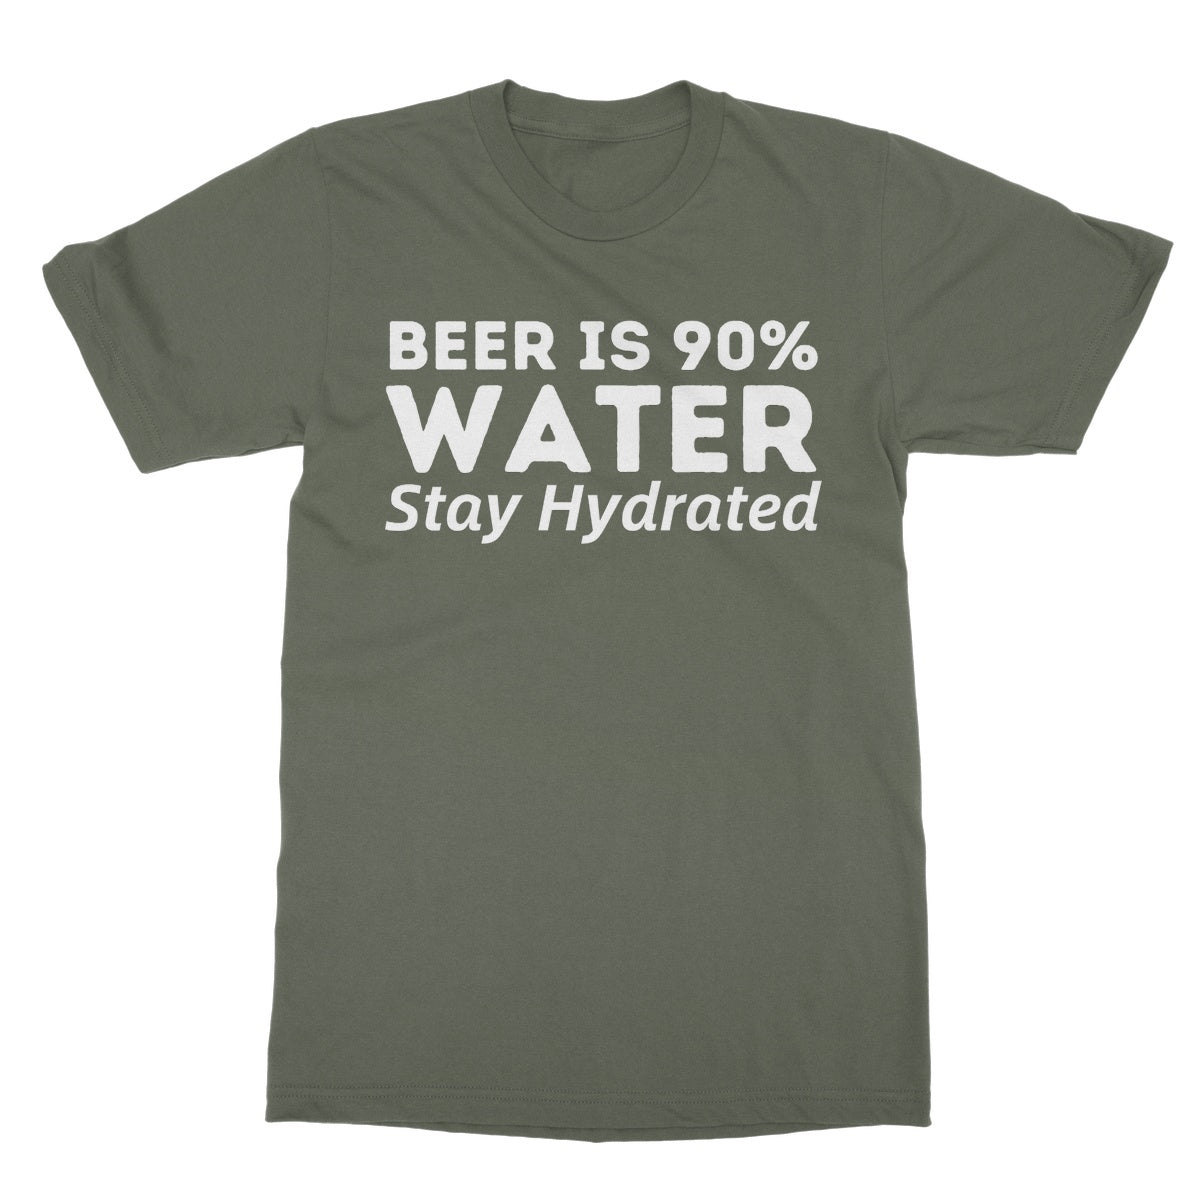 beer is 90% water t shirt green